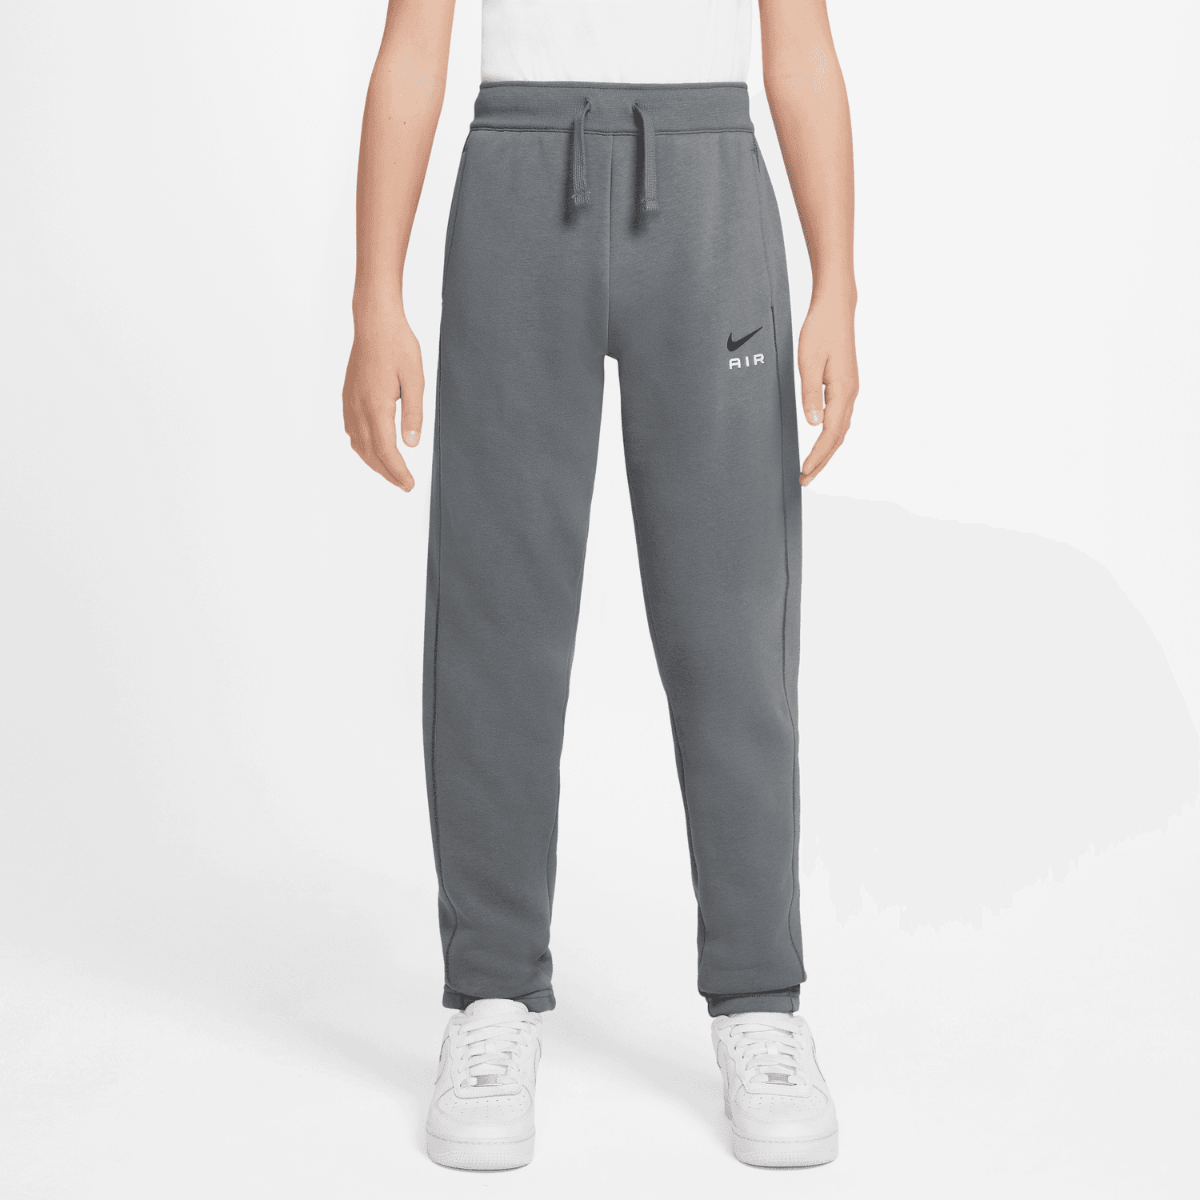 Pantaloni Nike Air Junior - Grigio/Bianco